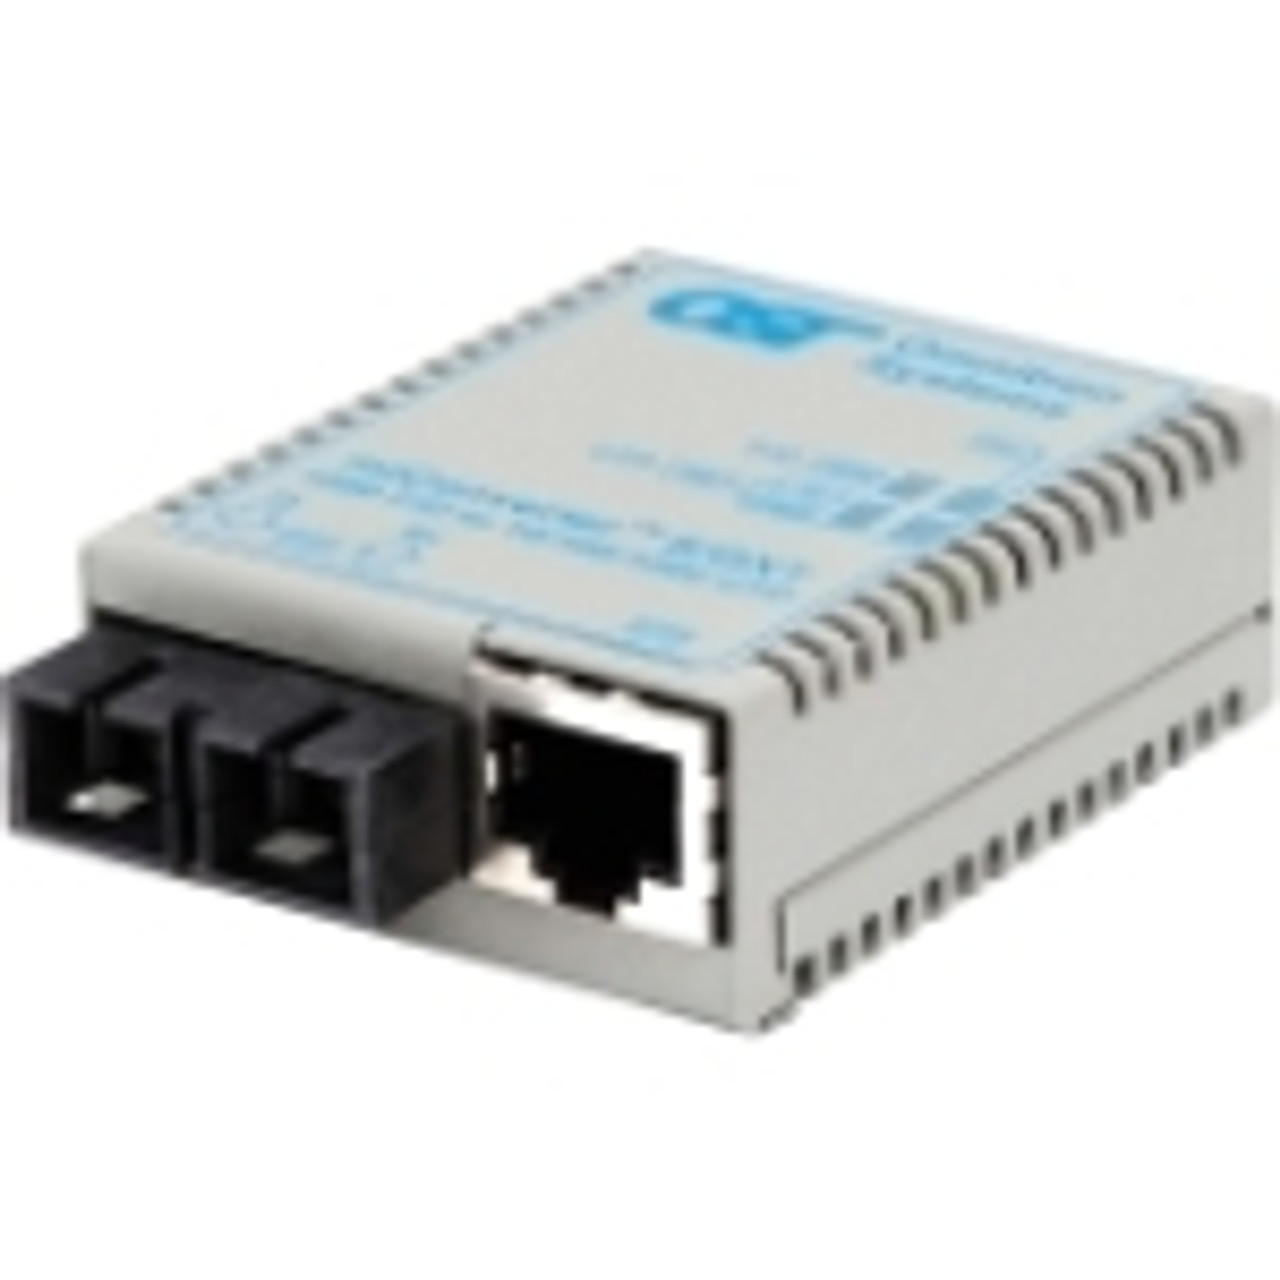 1622-0-1 miConverter/S 10/100/1000 Gigabit Ethernet Fiber Media Converter RJ45 SC Multimode 550m 1 x 10/100/1000BASE-T; 1 x 1000BASE-SX; USB/US AC Powered;